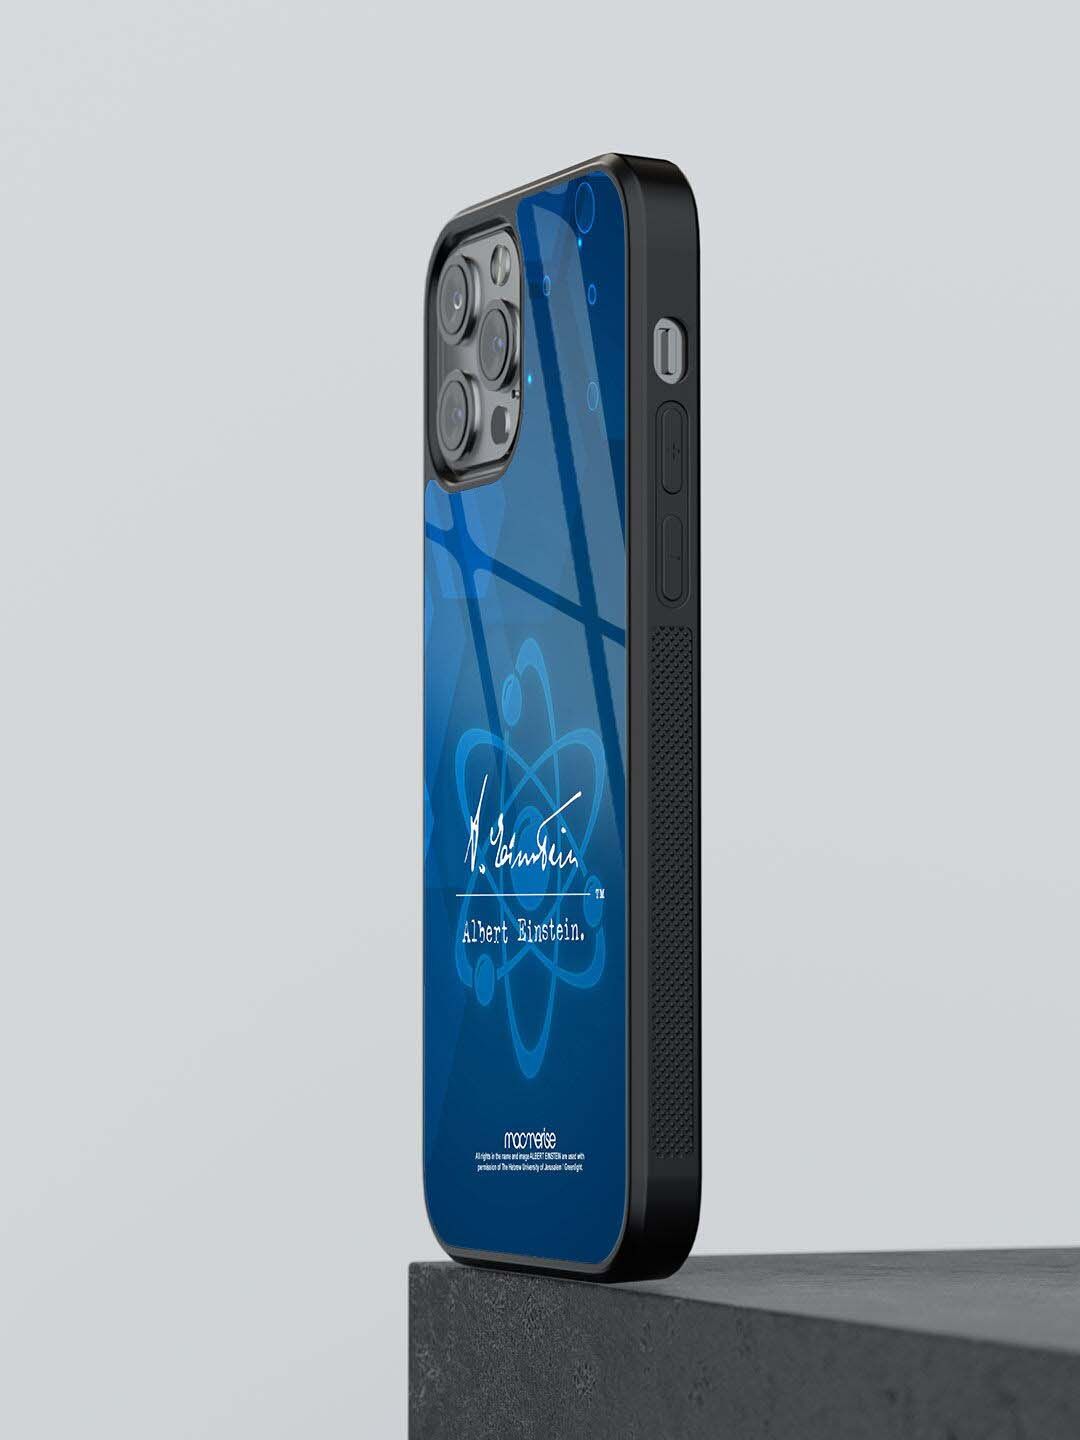 macmerise Blue Printed Iphone 13 Pro Max Back Case Price in India